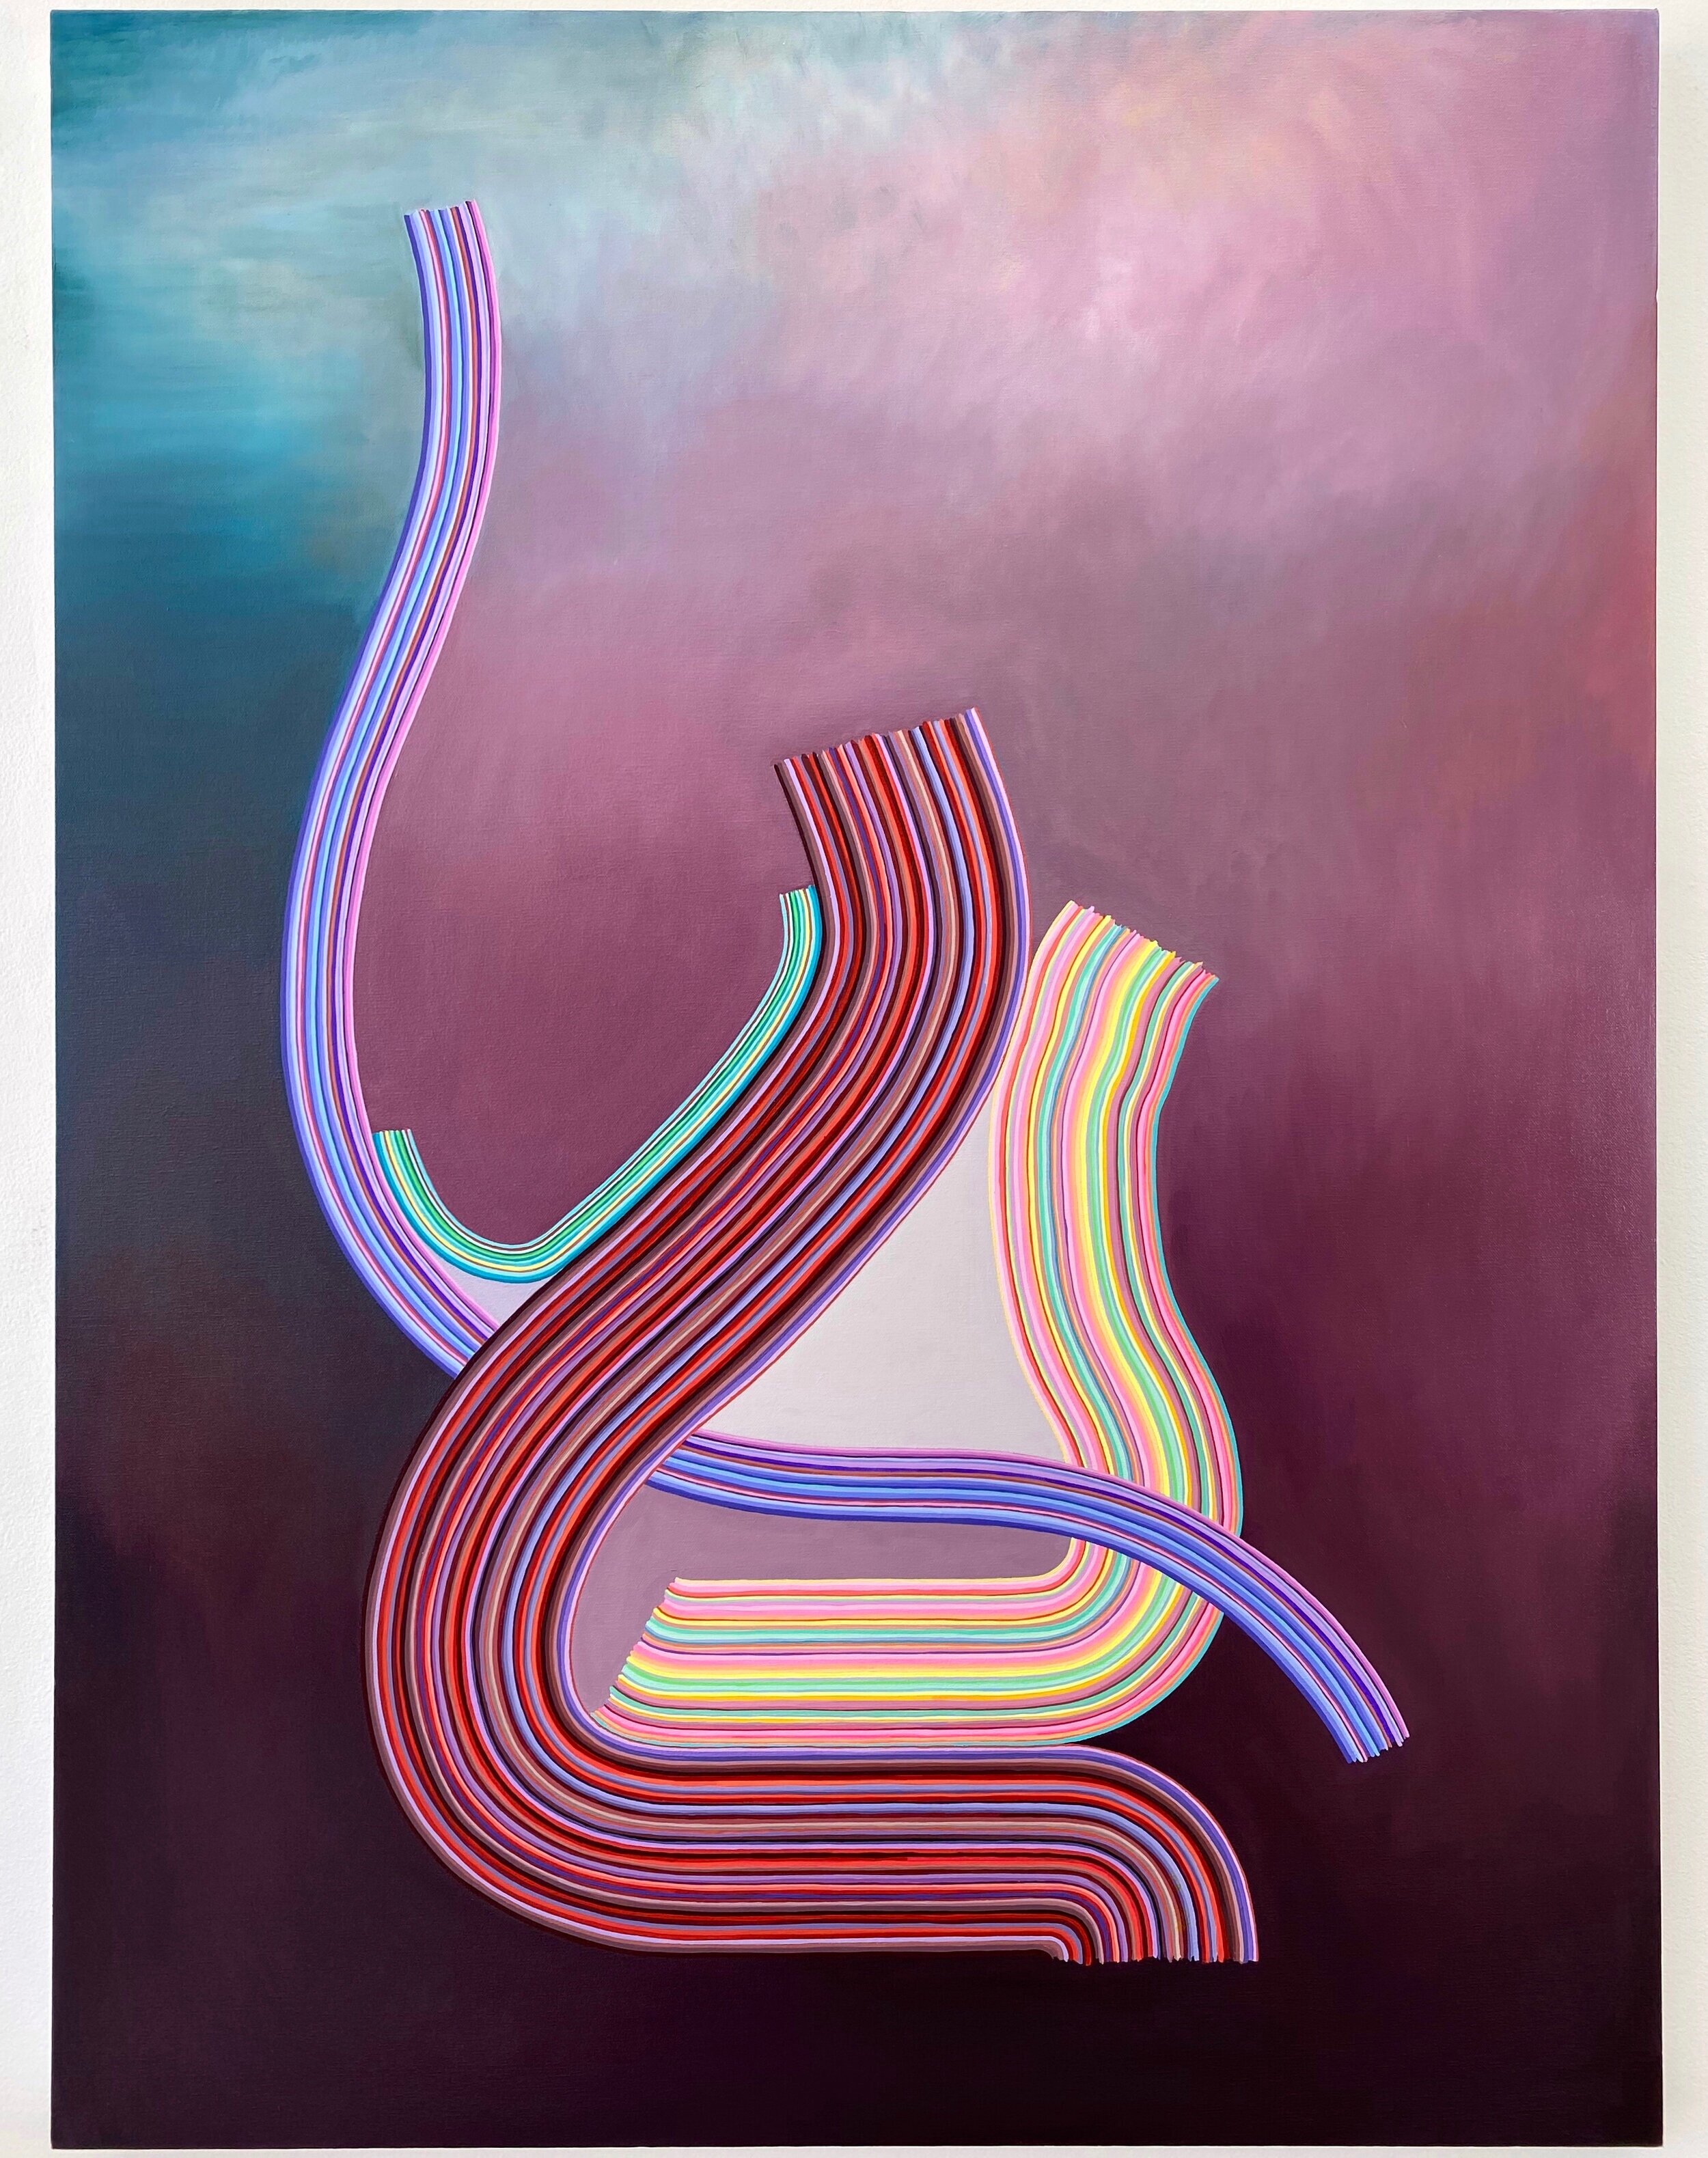  Oil and acrylic on canvas, 2020, 48” x 36” 